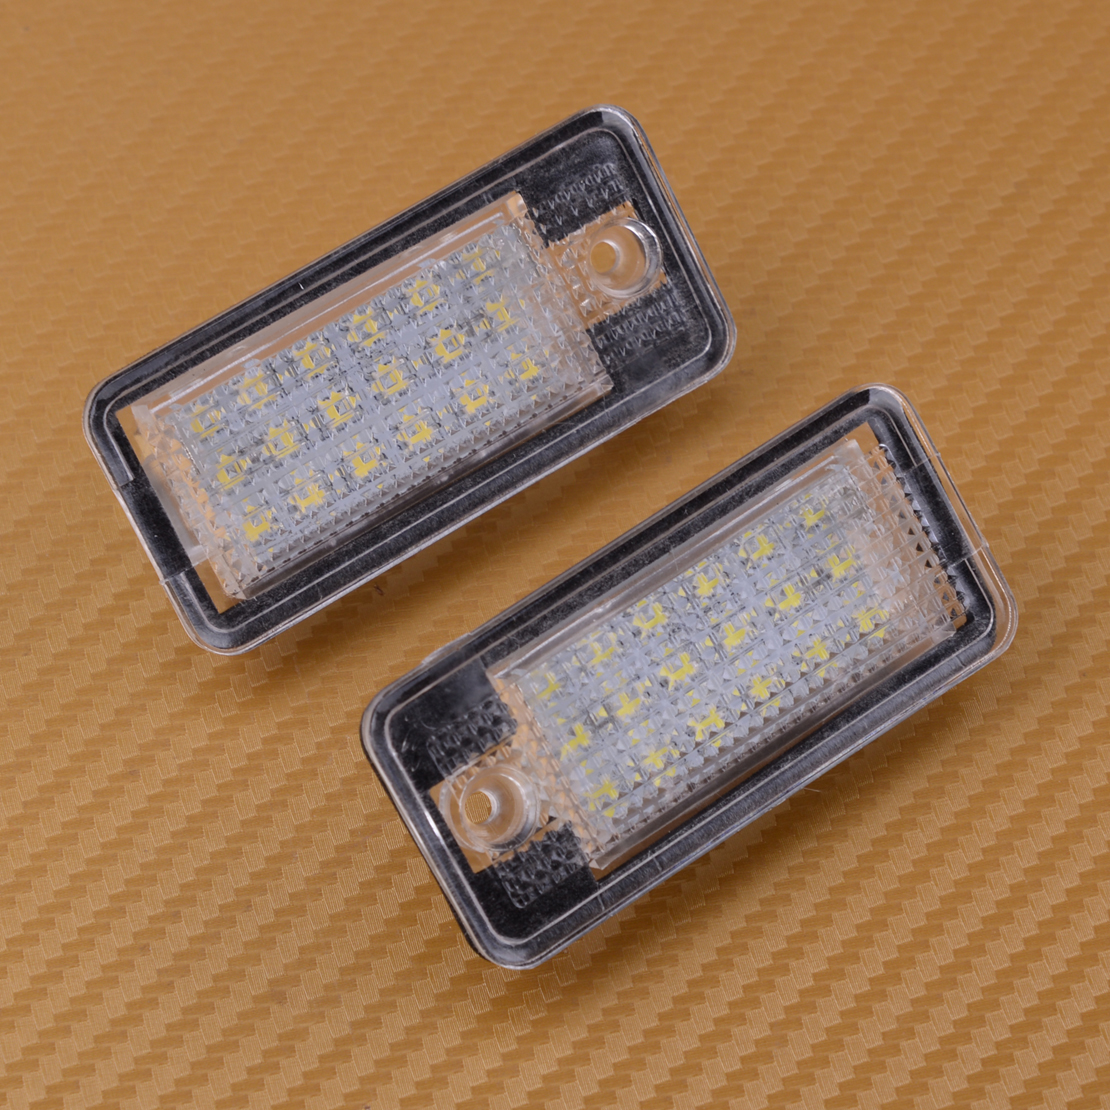 2x Error Free LED Kennzeichenbeleuchtung für AUDI Q7 A3 S3 S4 B6 A6 C6 A8 S8  ye